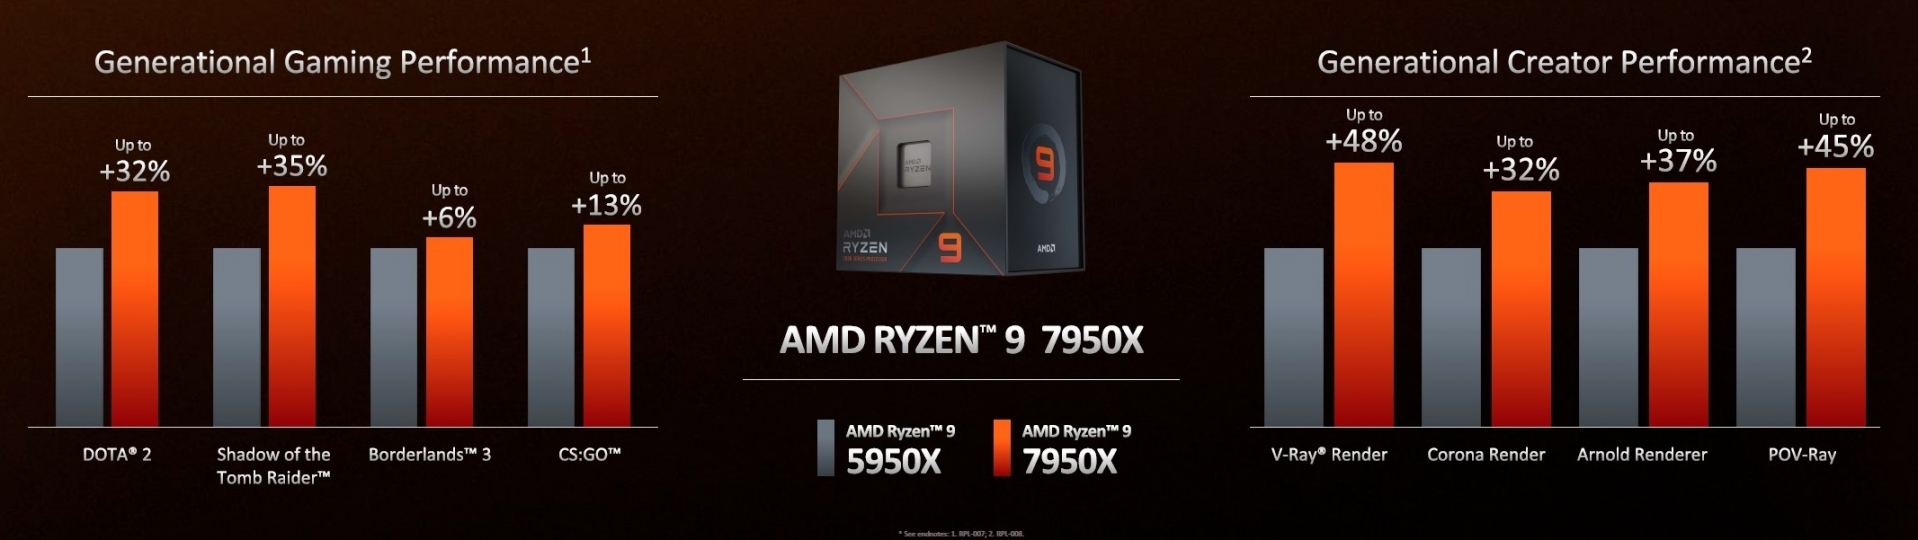 AMD Ryzen 7 7700X Review Specs